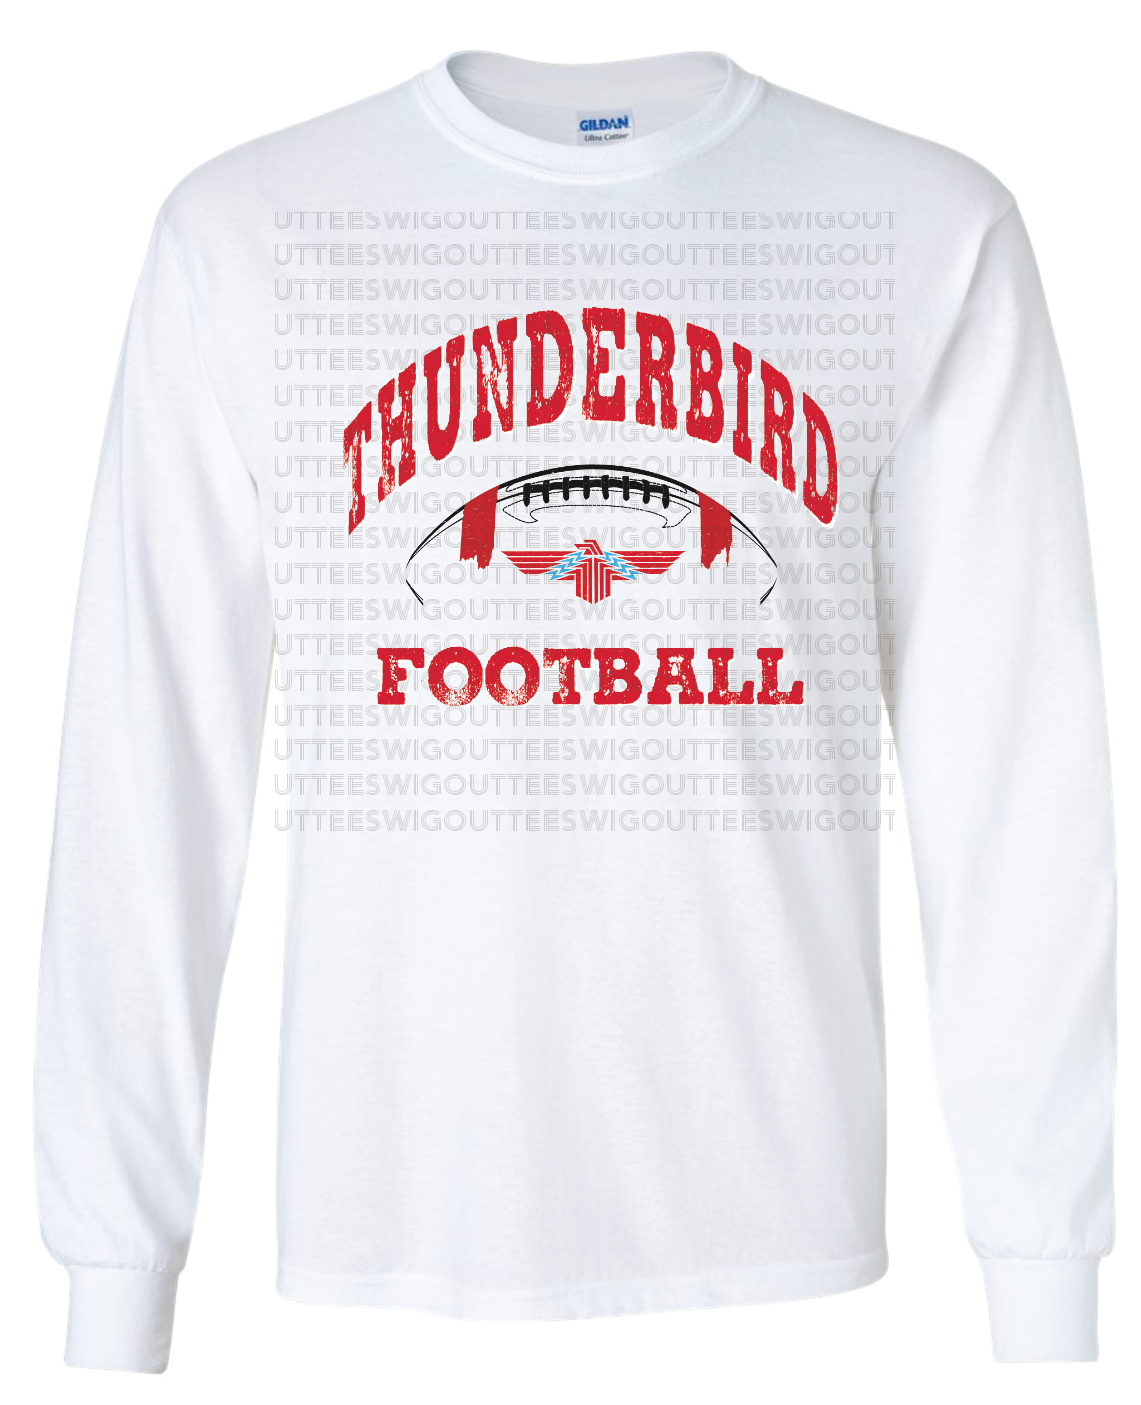 Thunderbird Football Gildan Ultra Cotton Long Sleeve T-Shirt